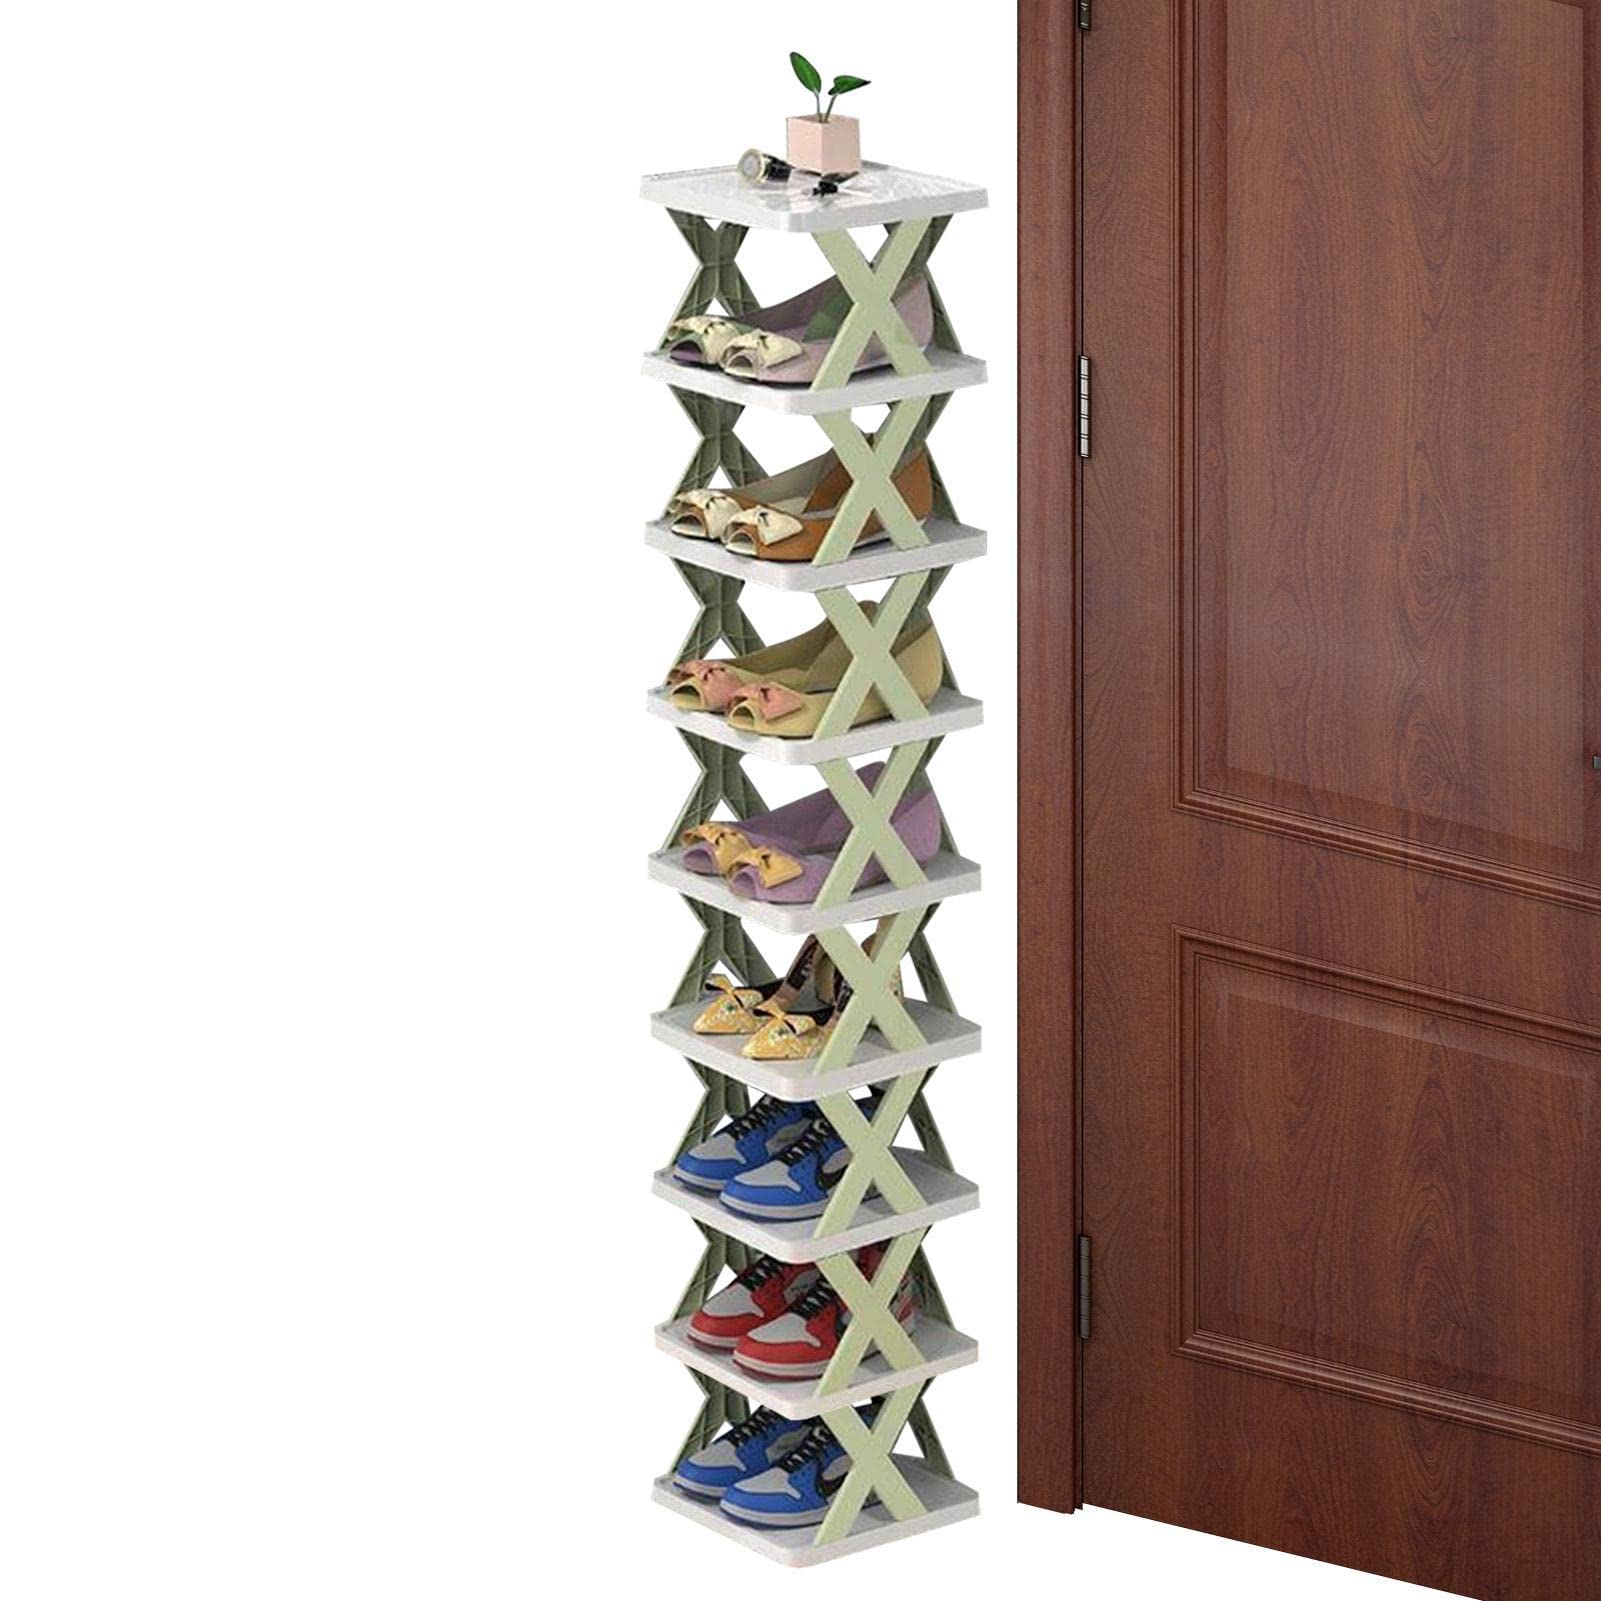 Doefo 9 Layers Foldable Shoe Rack, Compact Shoe Rack Storage- Assemble Detachable Shoe Shelves Shoe Cabinet - Creative Tower Shelf Storage for Entryway